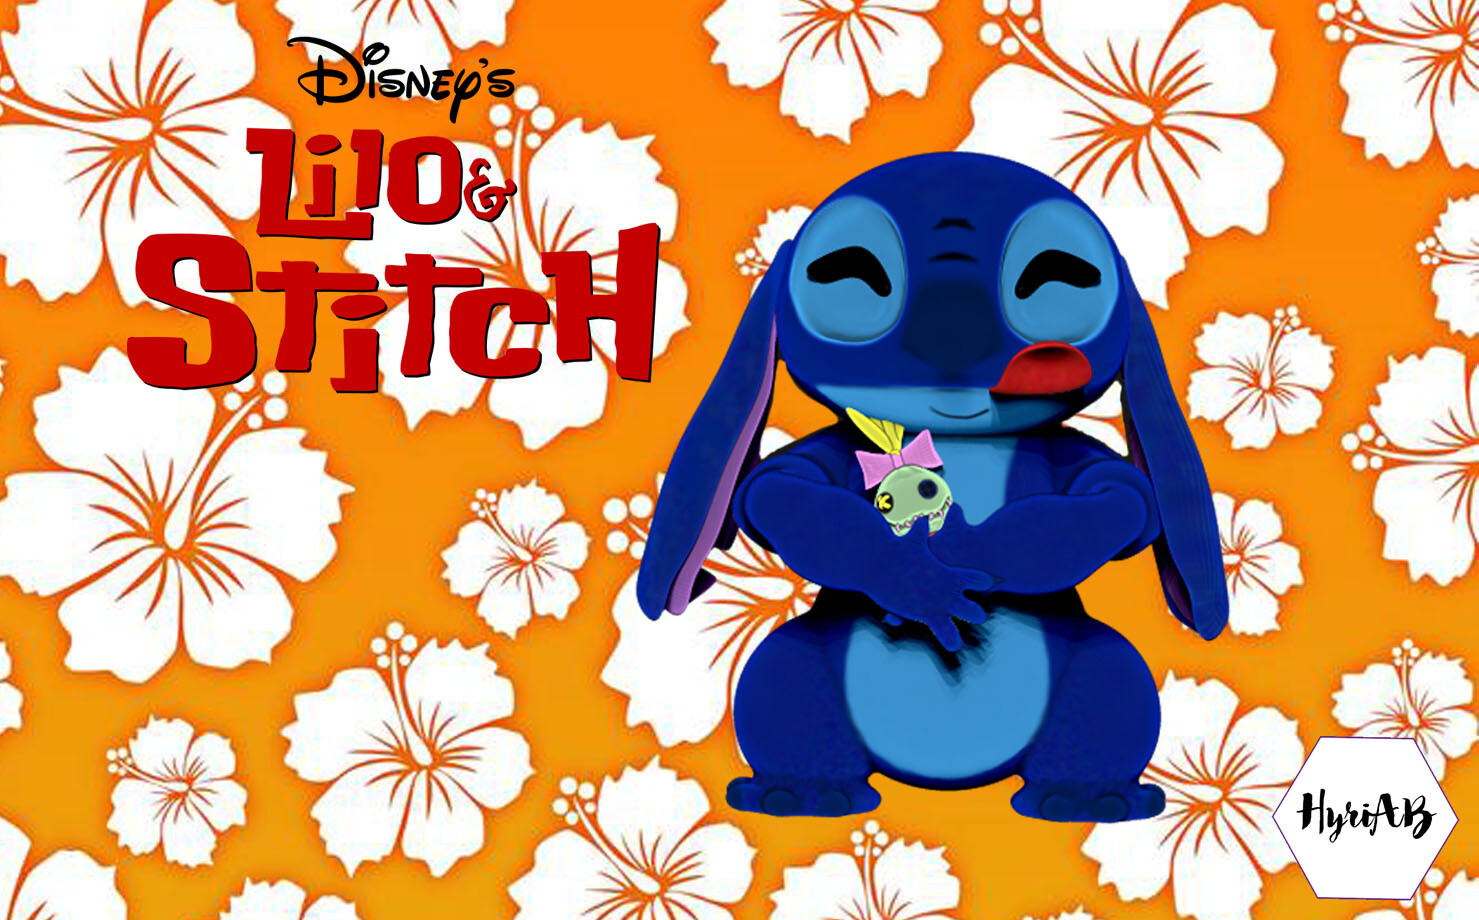 Stitch and Scrump (Lilo & Stitch)